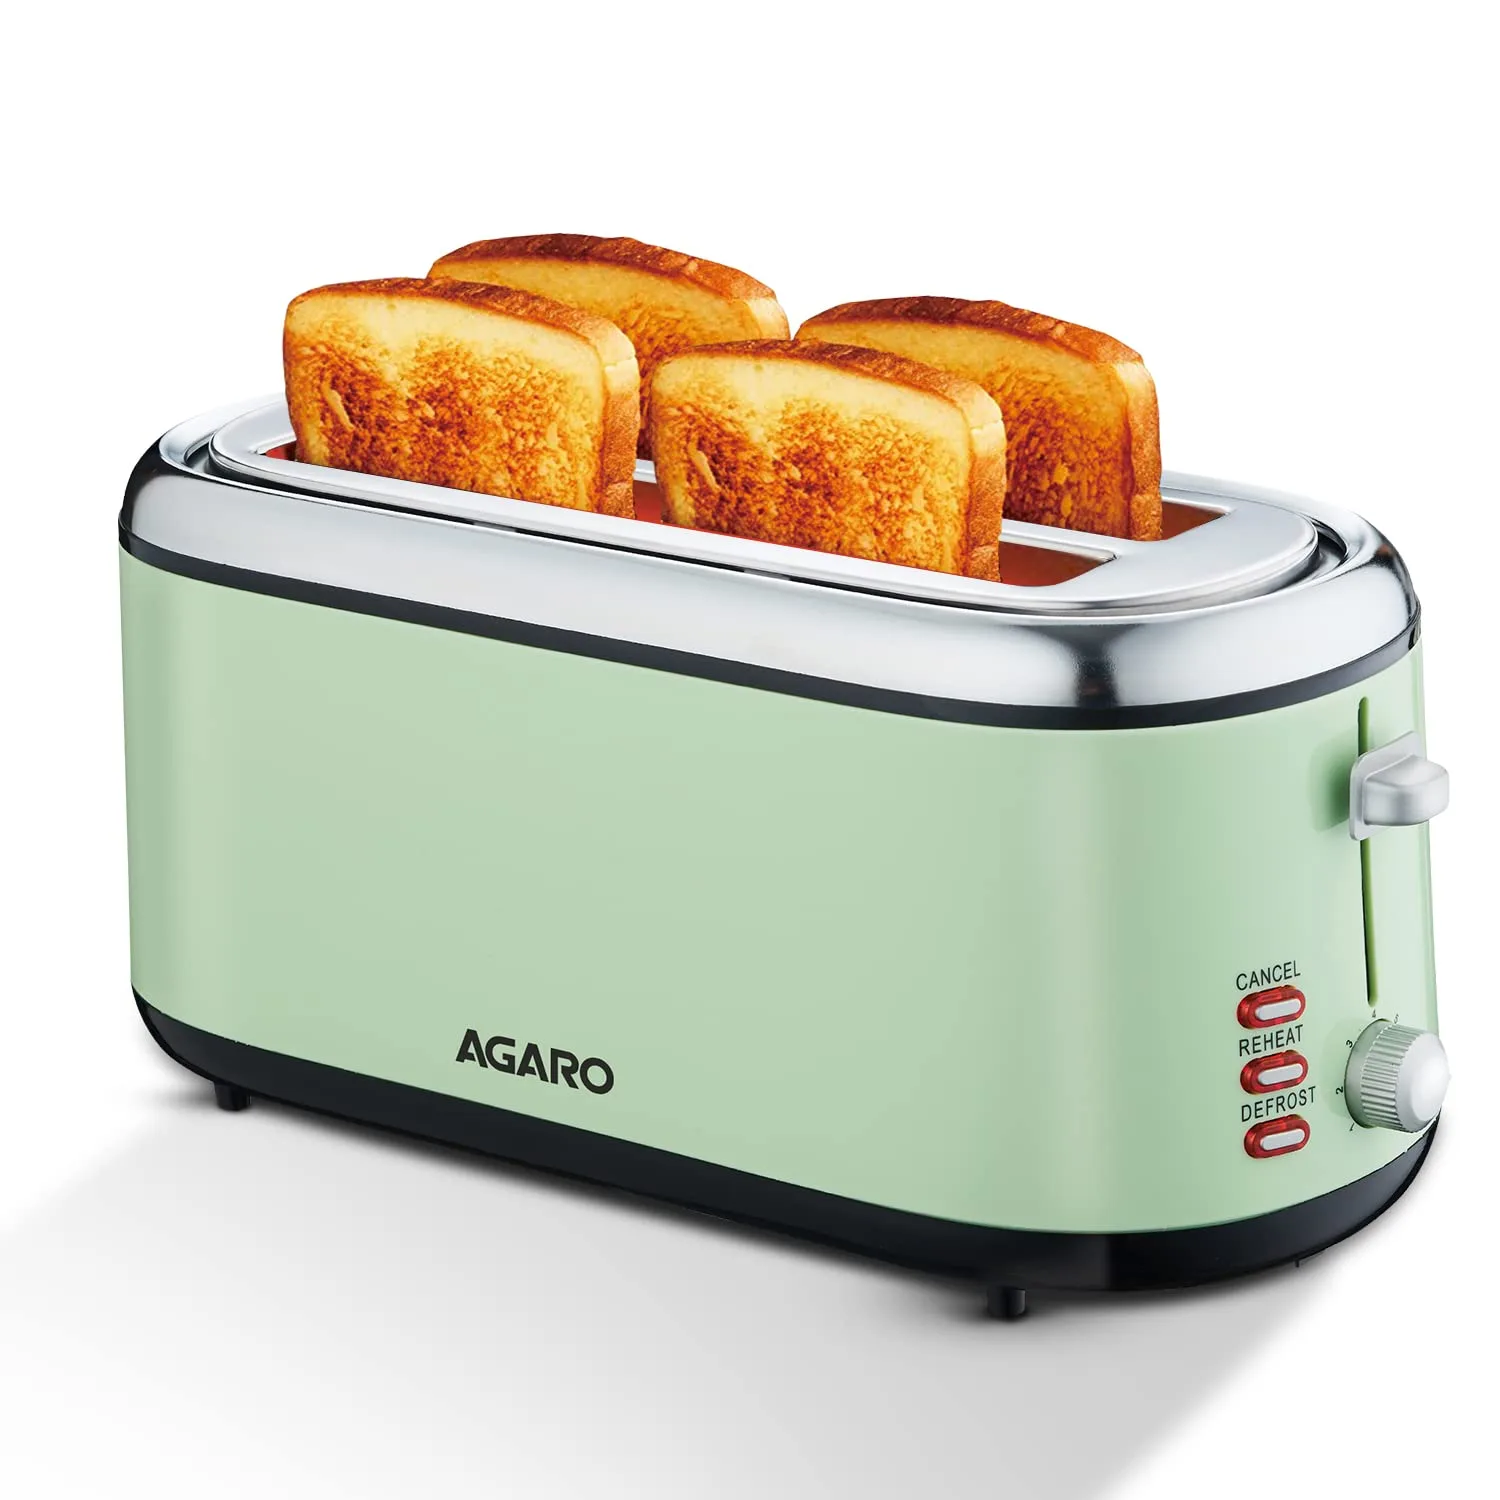 best bread toasters, Image Credit - Amazon